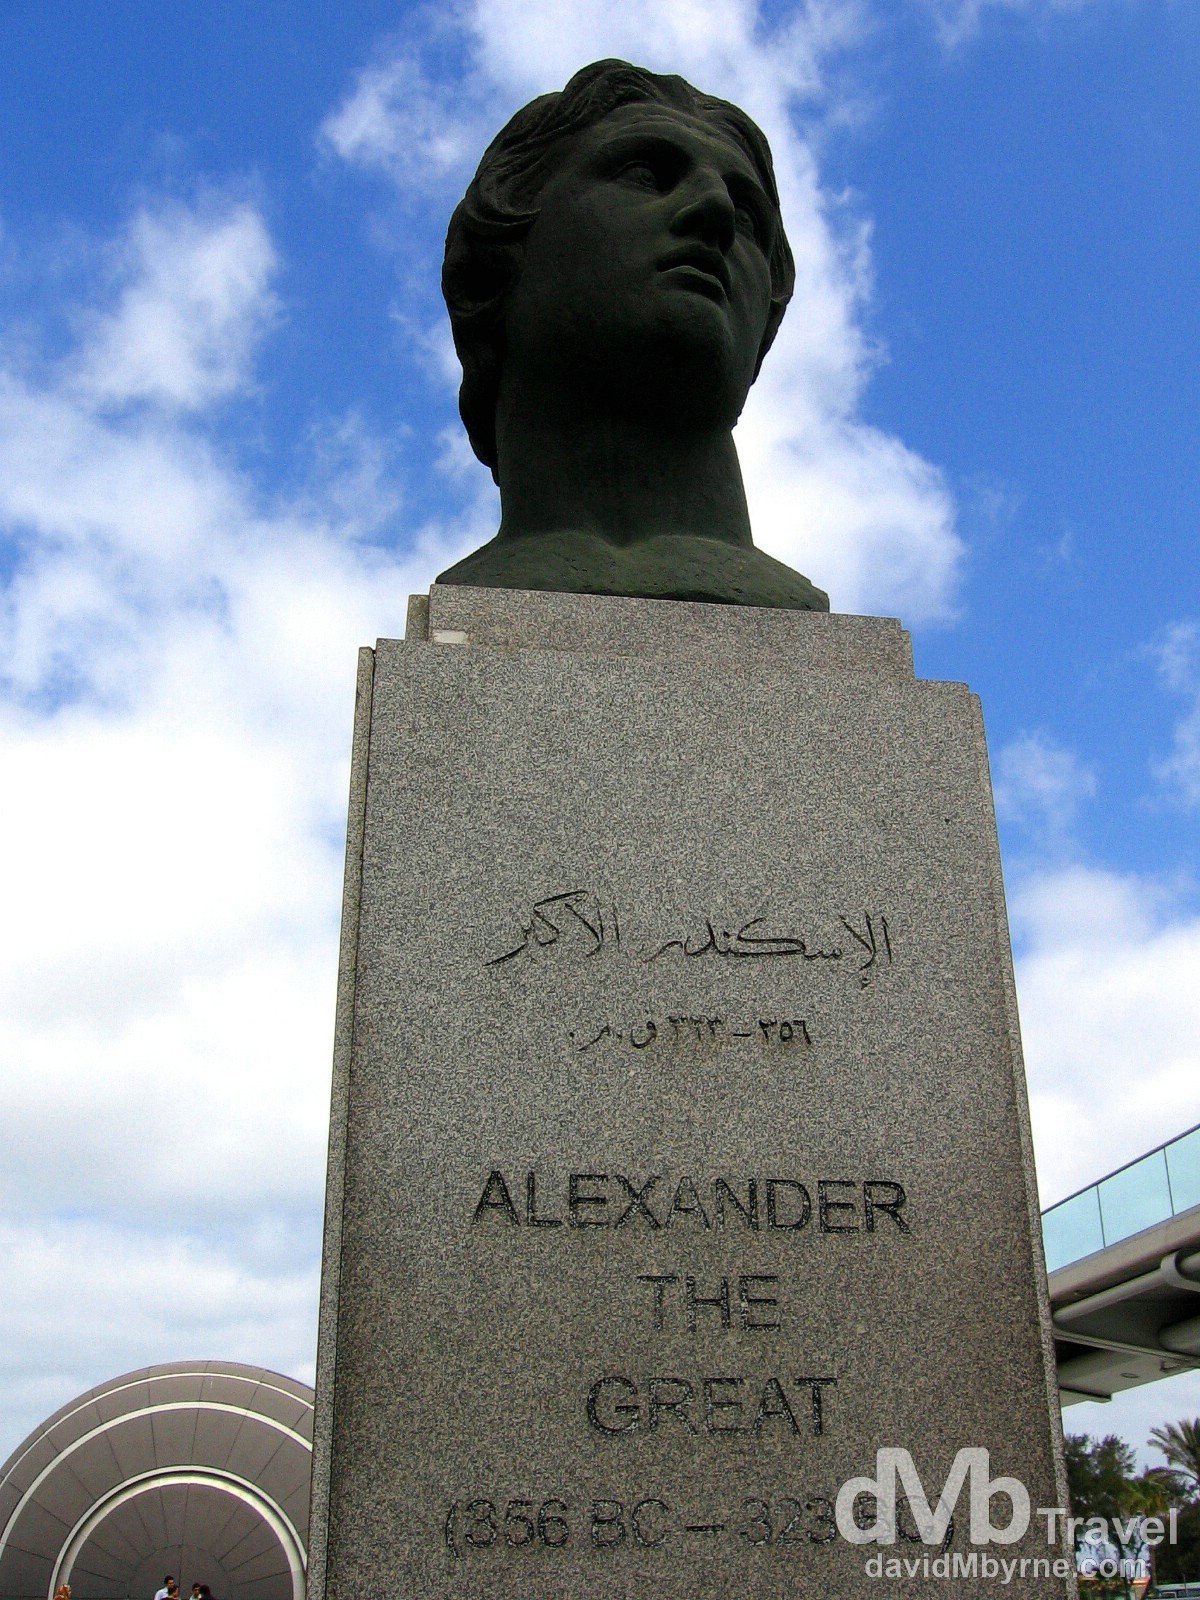 Alexander The Great, Bibliotheca Alexandrina, Alexandria, Egypt. April 16, 2008.